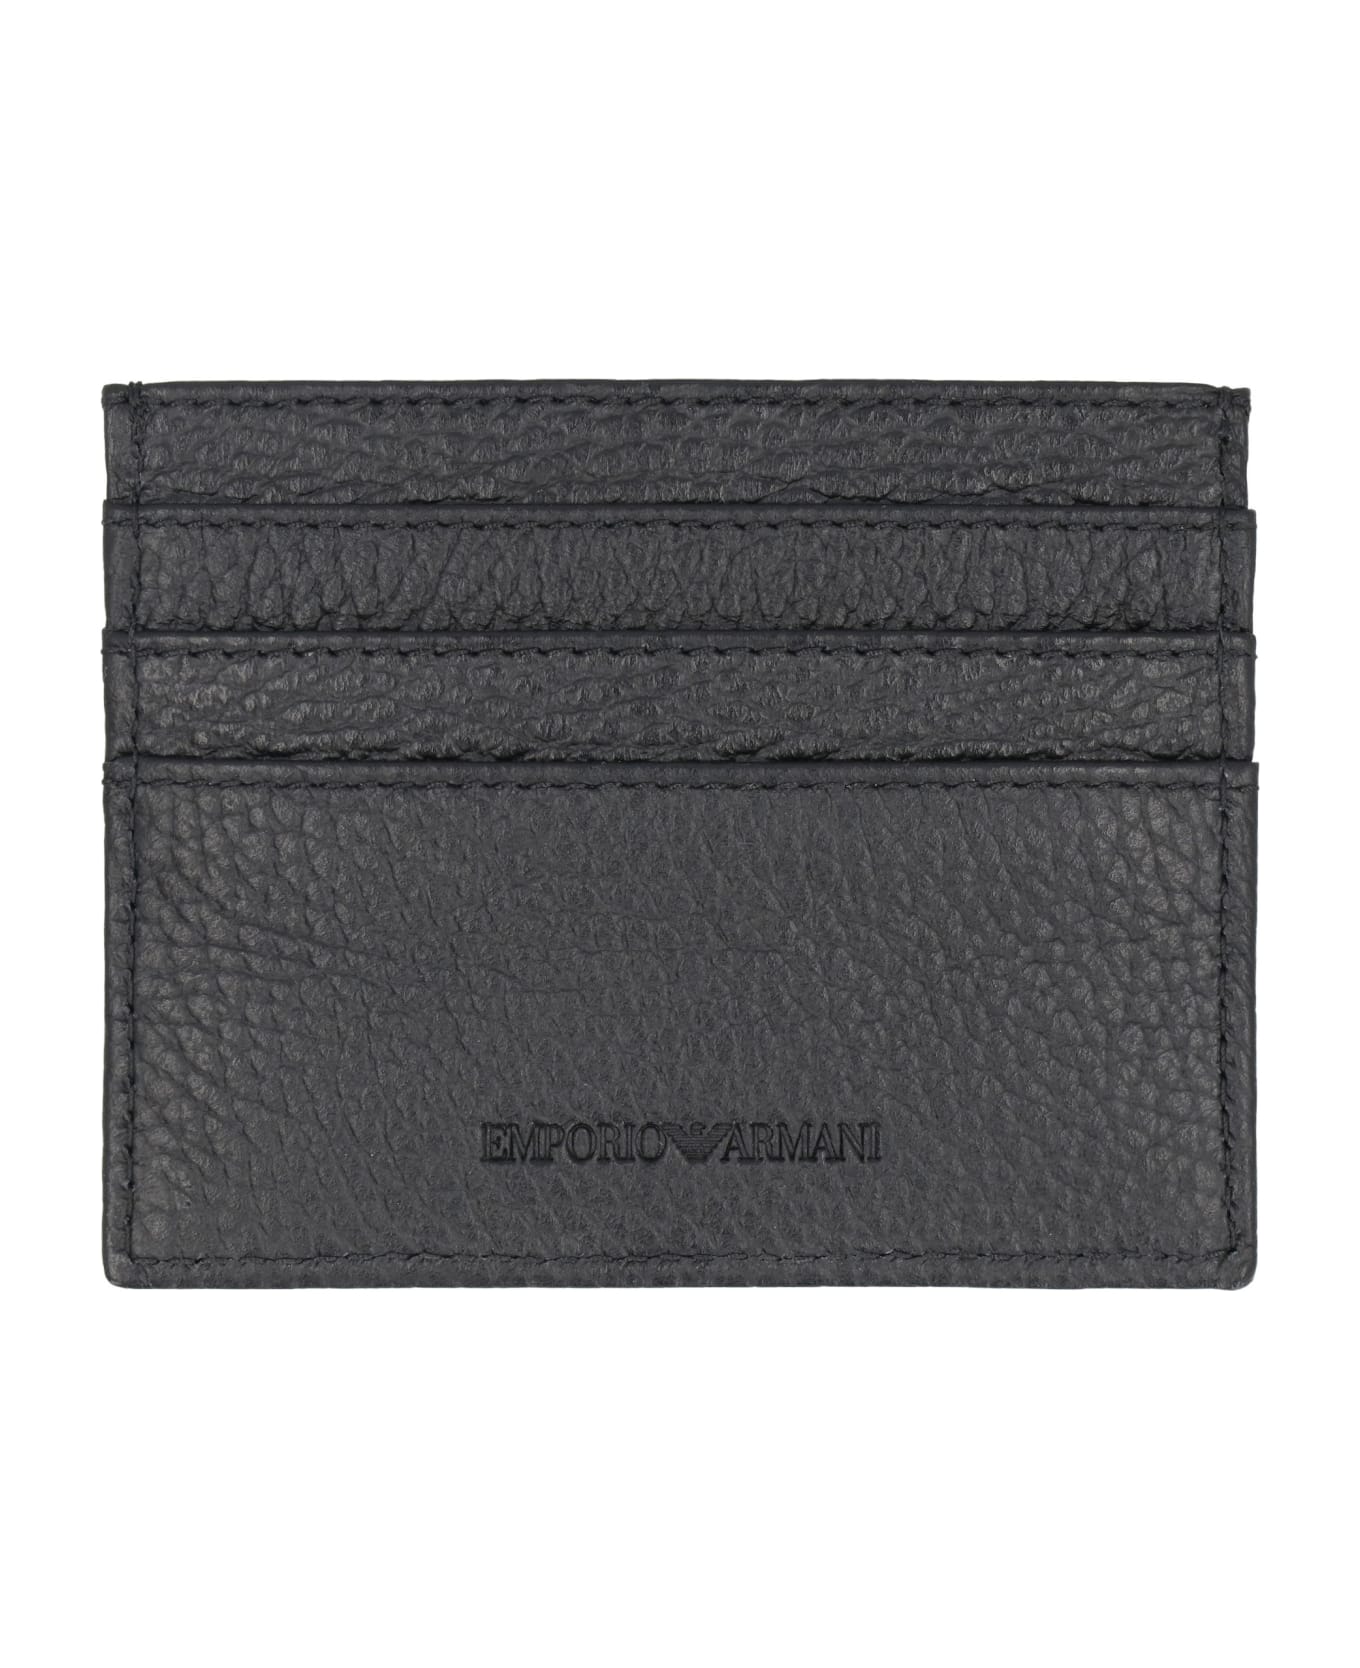 Emporio Armani Leather Card Holder - black 財布